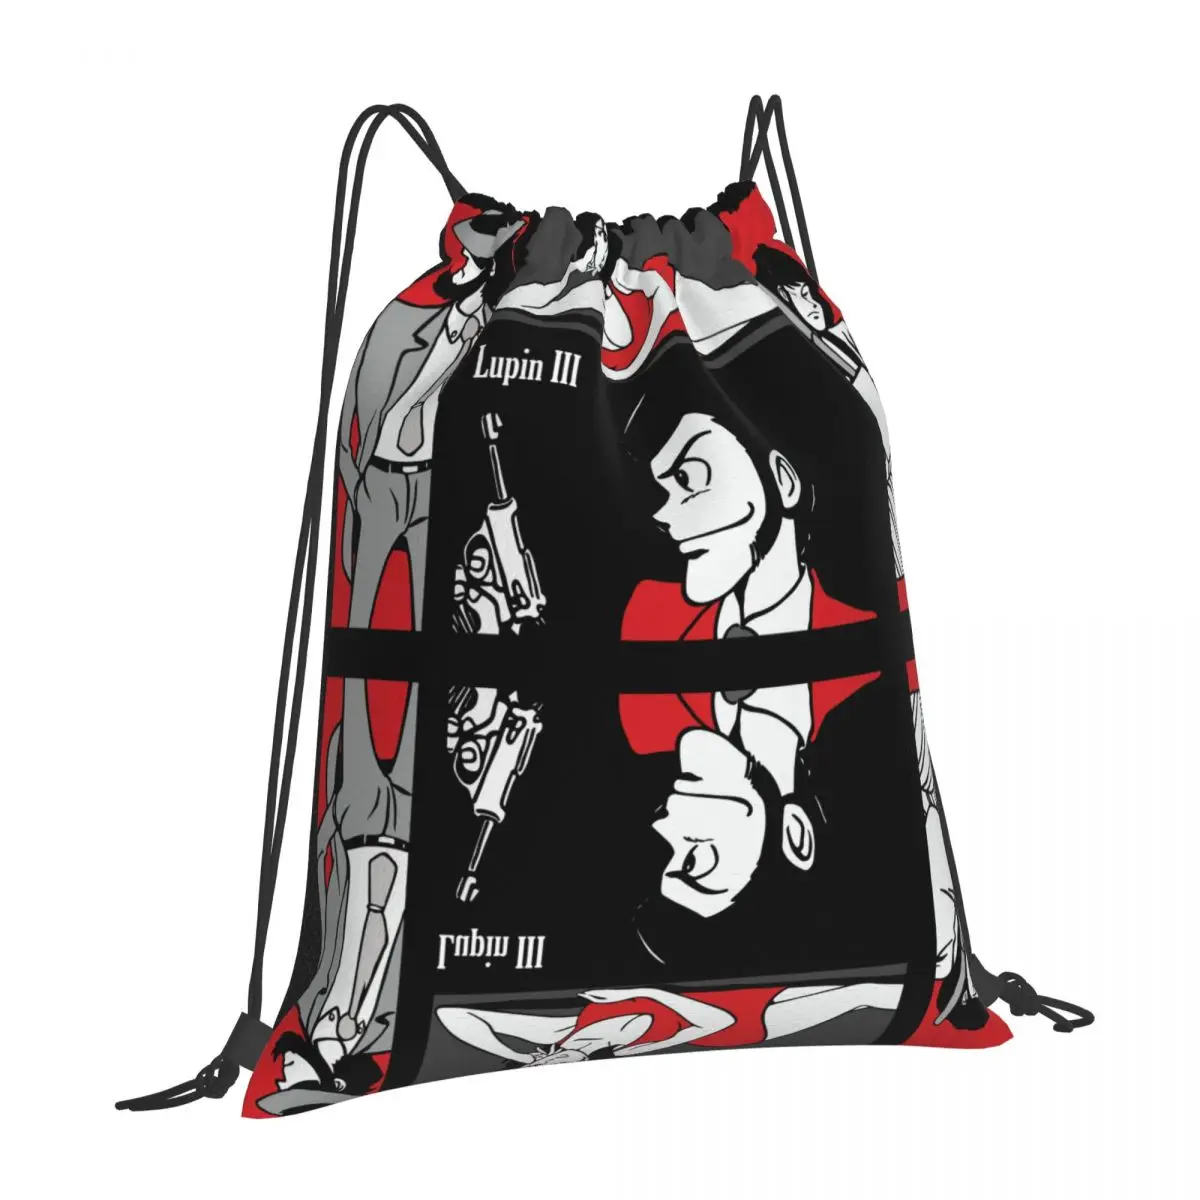 

Lupin 3 Iii 16 Drawstring Bags Backpacks Women Men Sport Gym Sackpack Travel Canvas Draw String Bag Portable Bag Sack